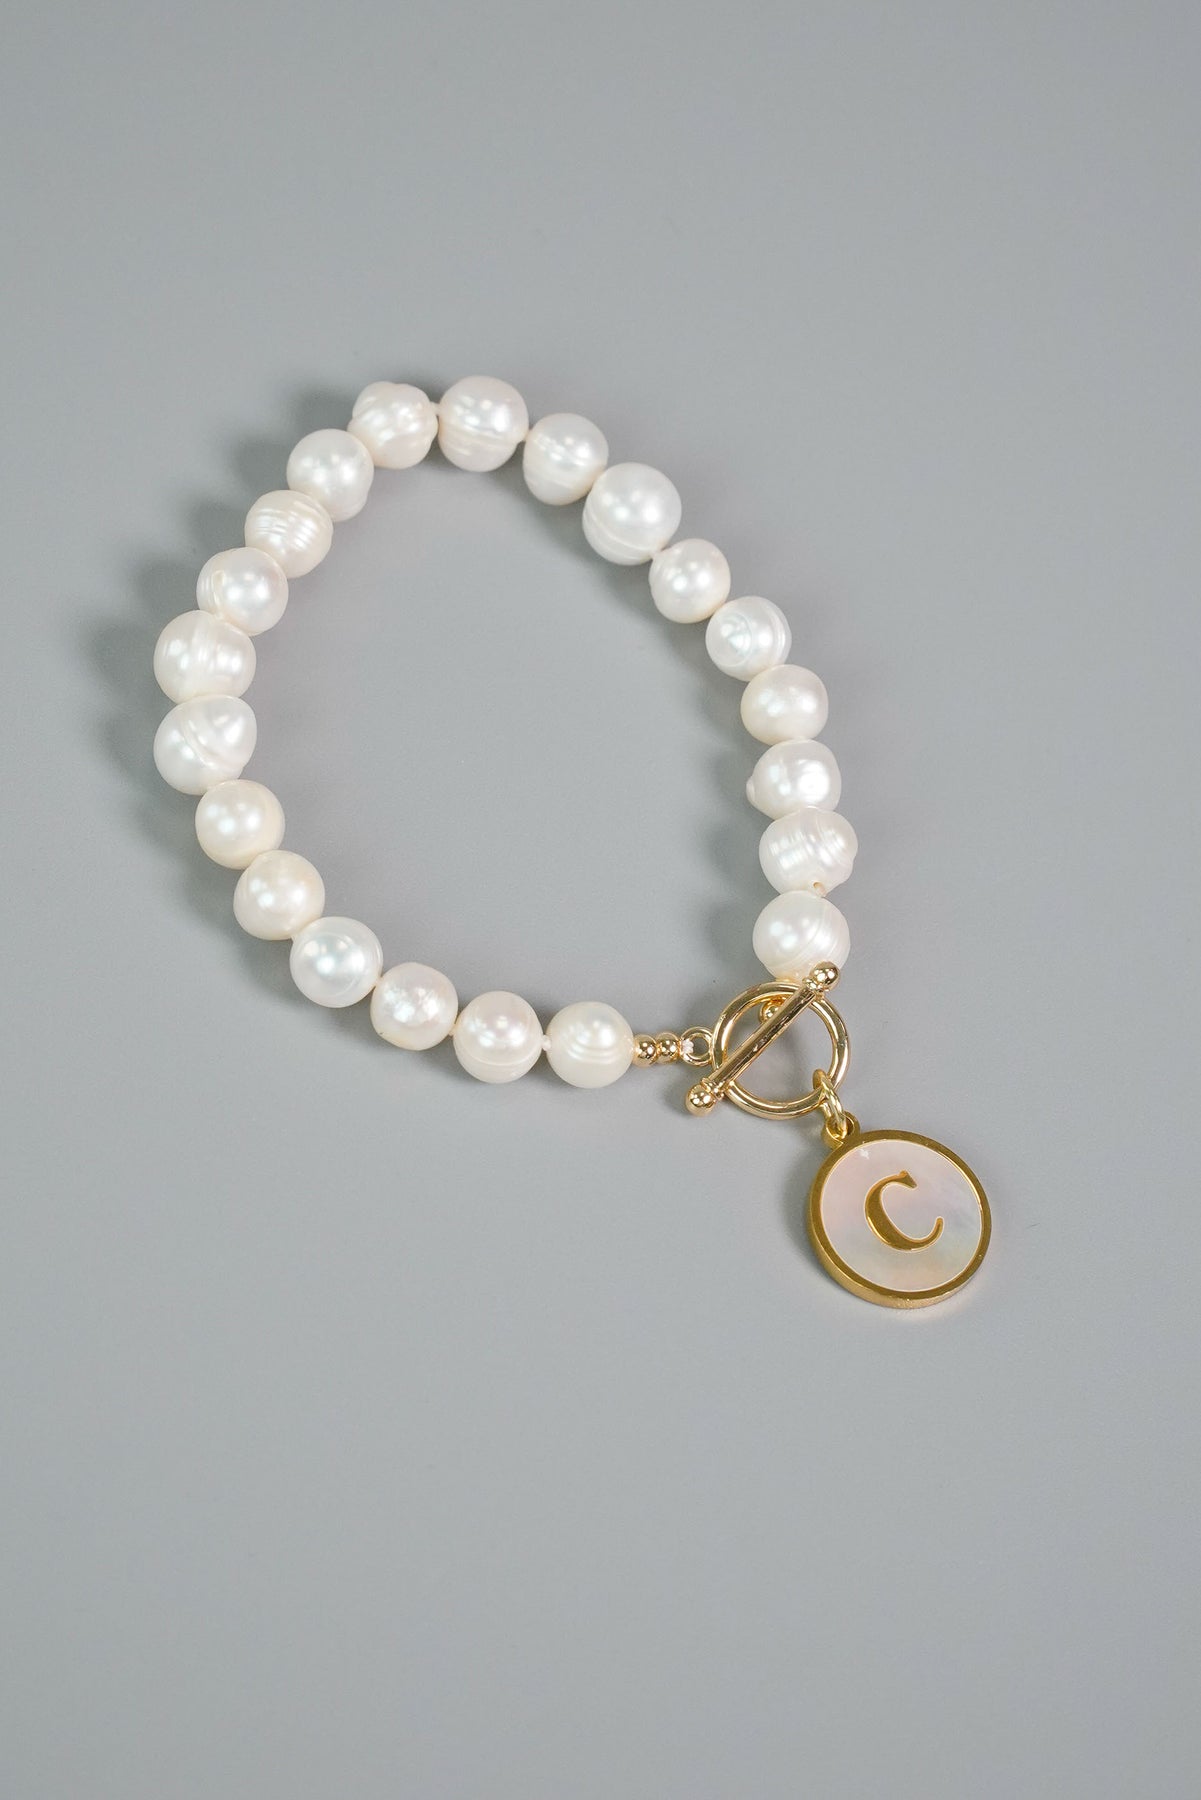 Pearl Bracelets - South Sea Pearl Bracelets | Aquarian Pearls